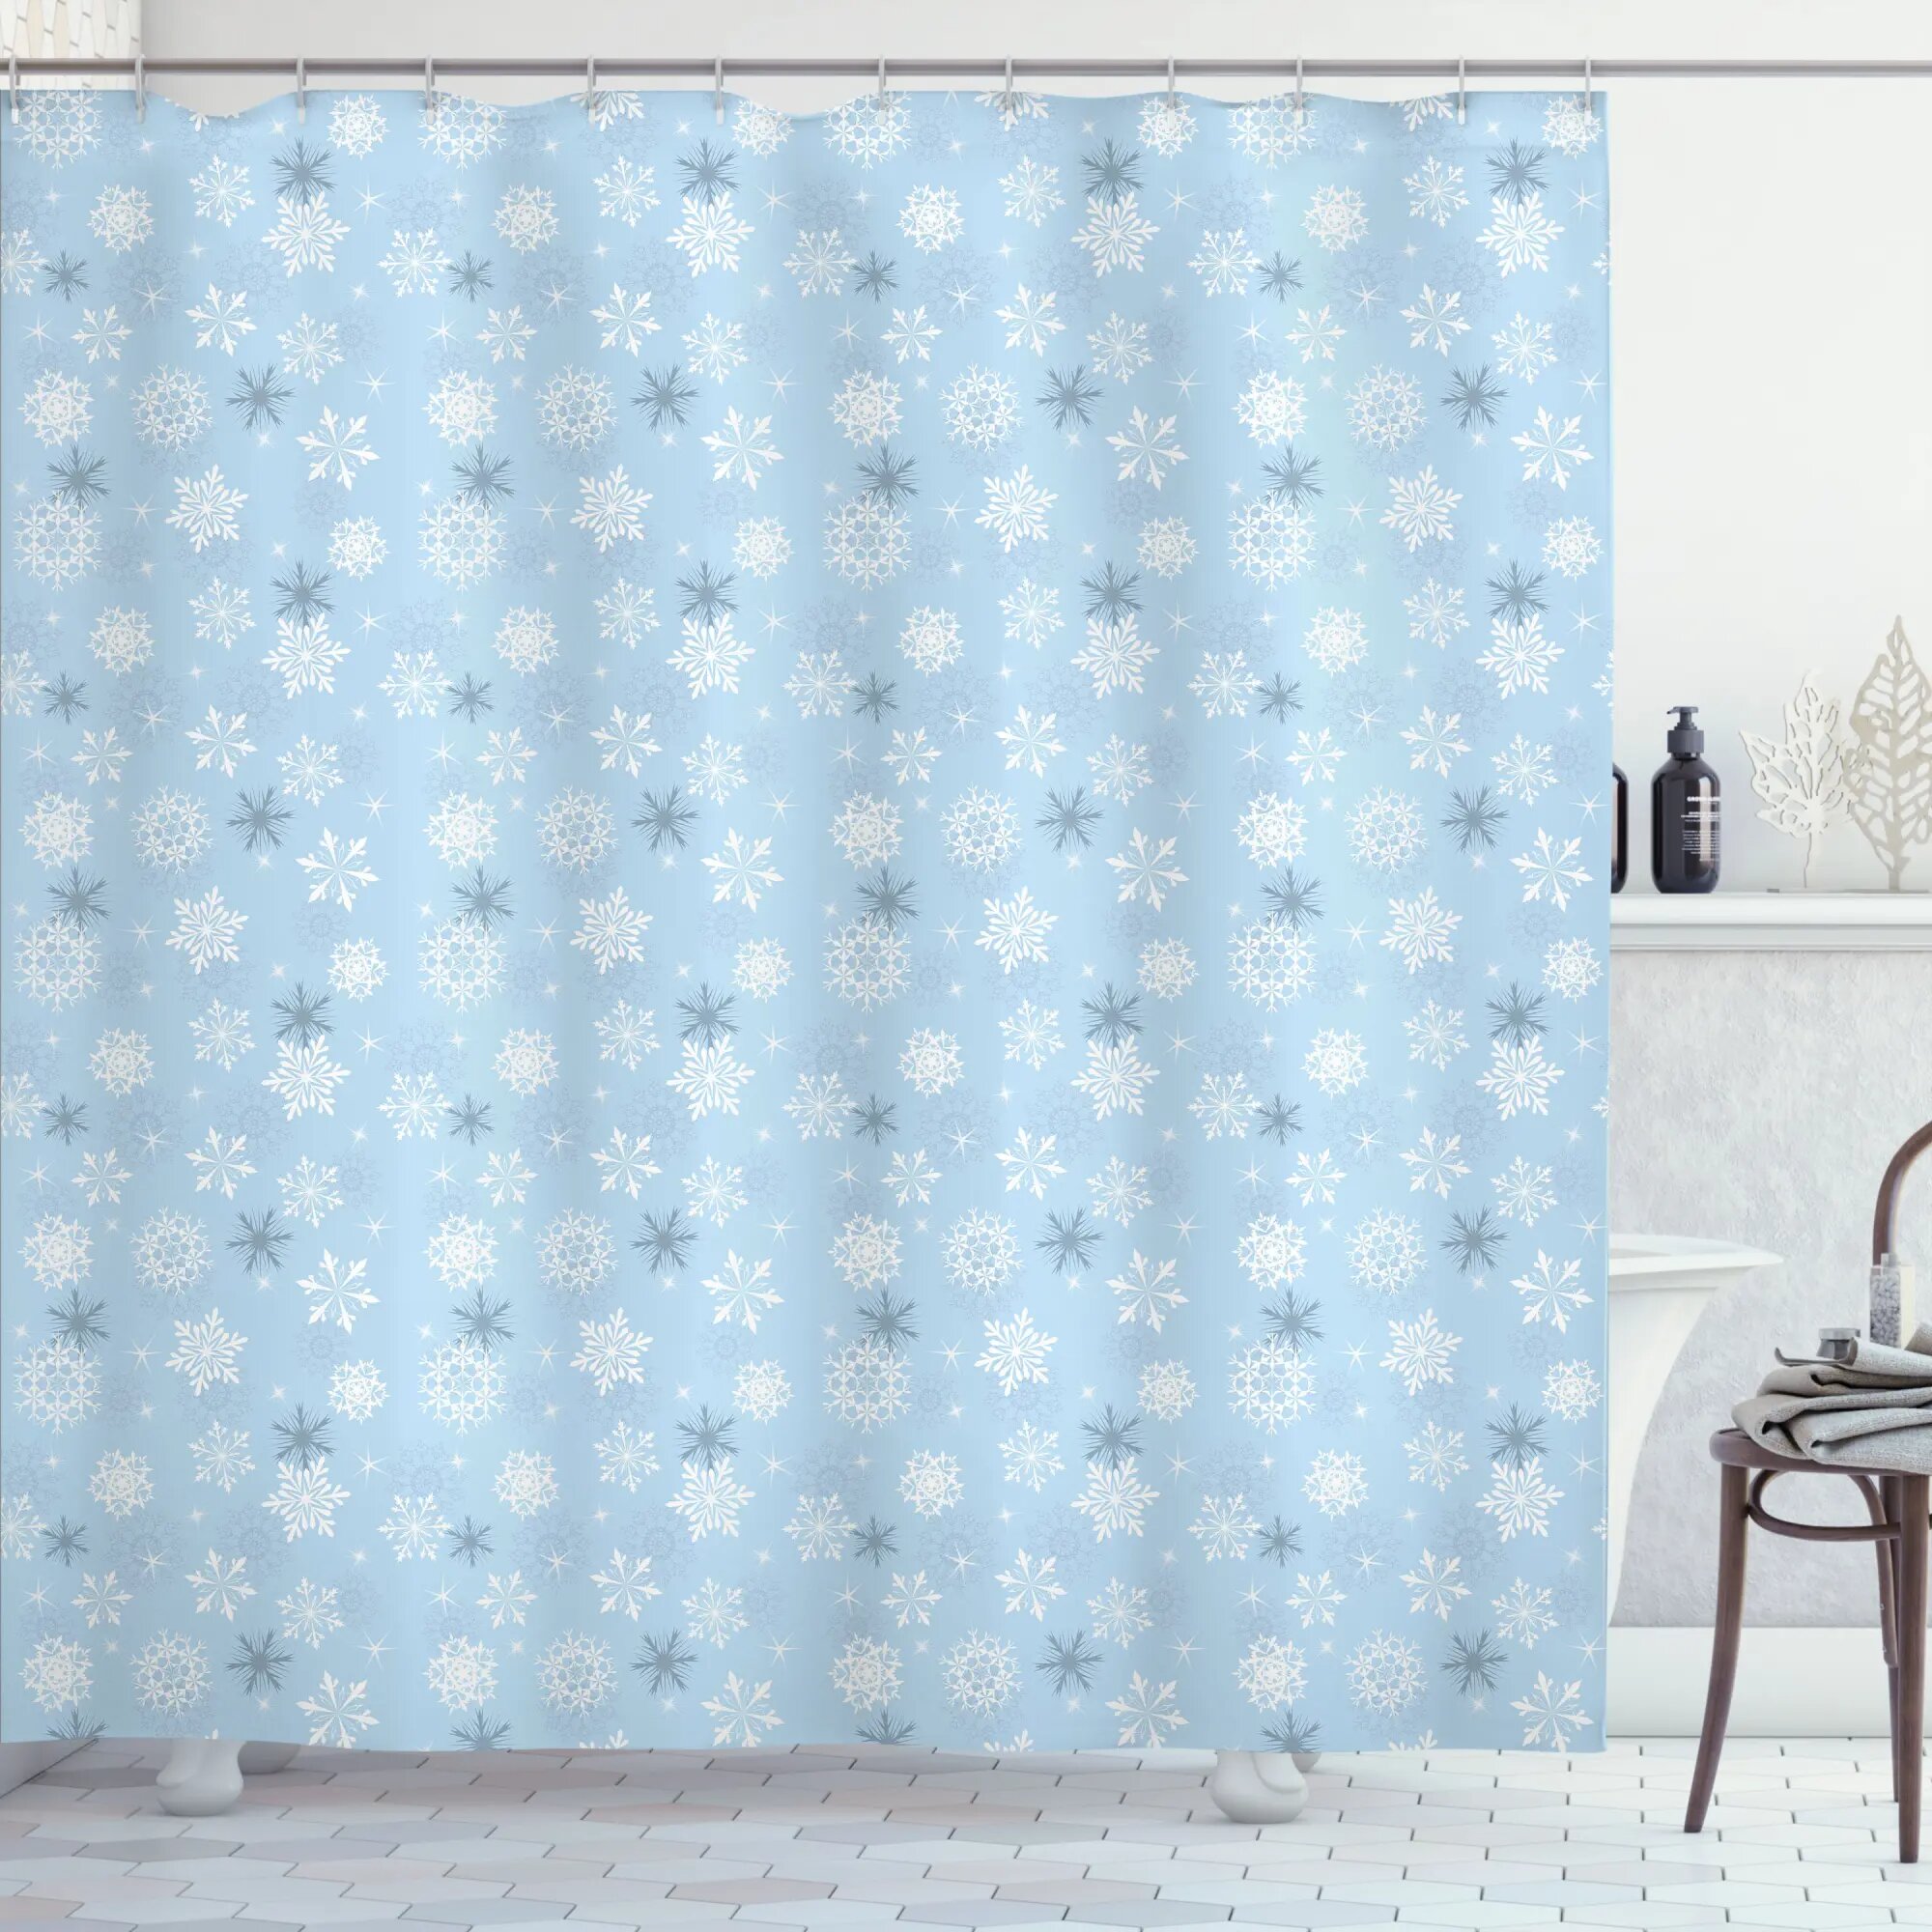 Snowflake Shower Curtain Set + Hooks East Urban Home Size: 70 H x 69 W